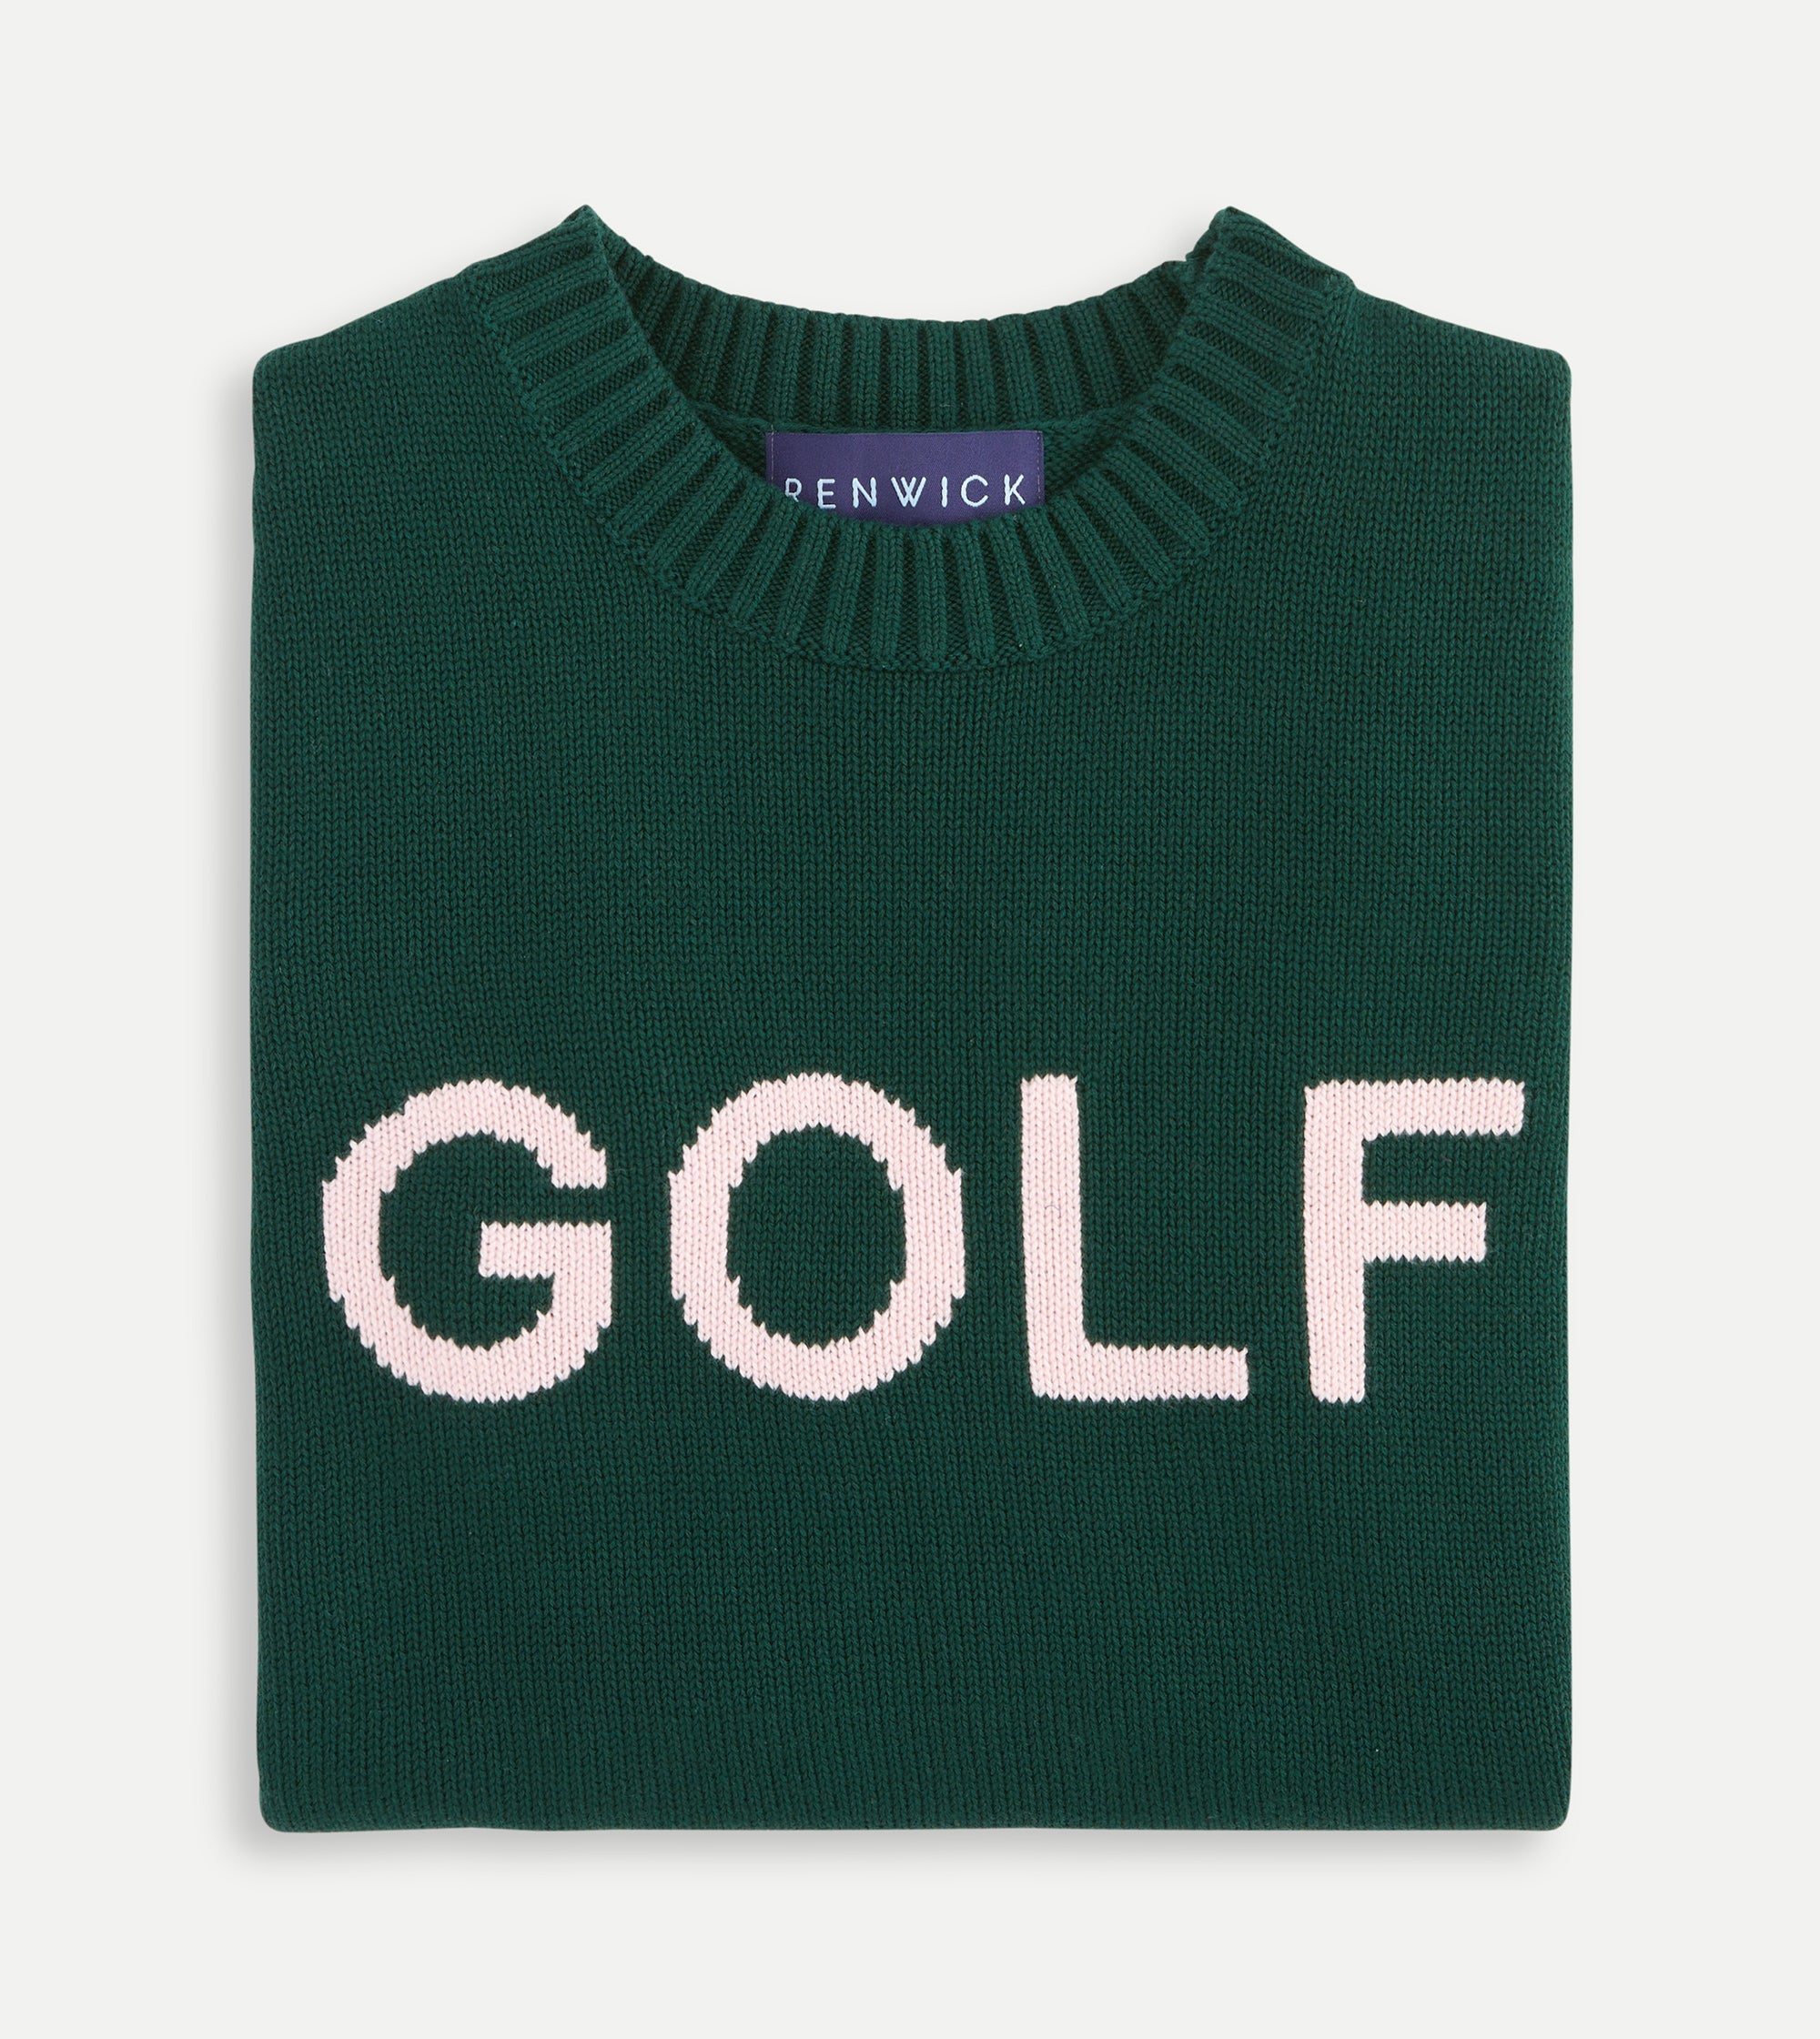 Renwick Golf Sweater - Hunter Petal